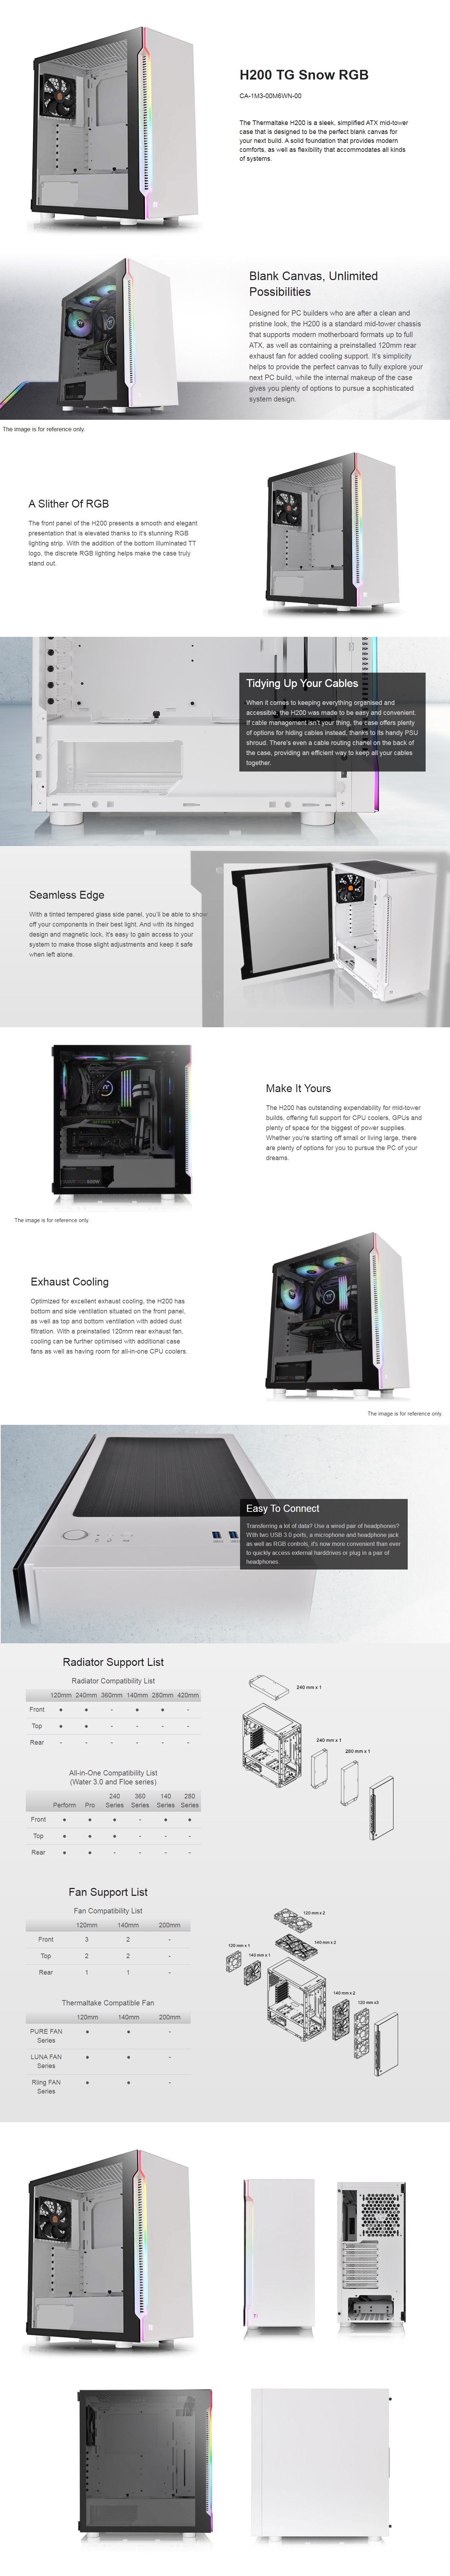  <b>ATX Mid Tower</b>: H200 TG RGB Snow Case Tempered Glass, 1x 120mm Fan, USB 3.0 x2, RGB Button, White  